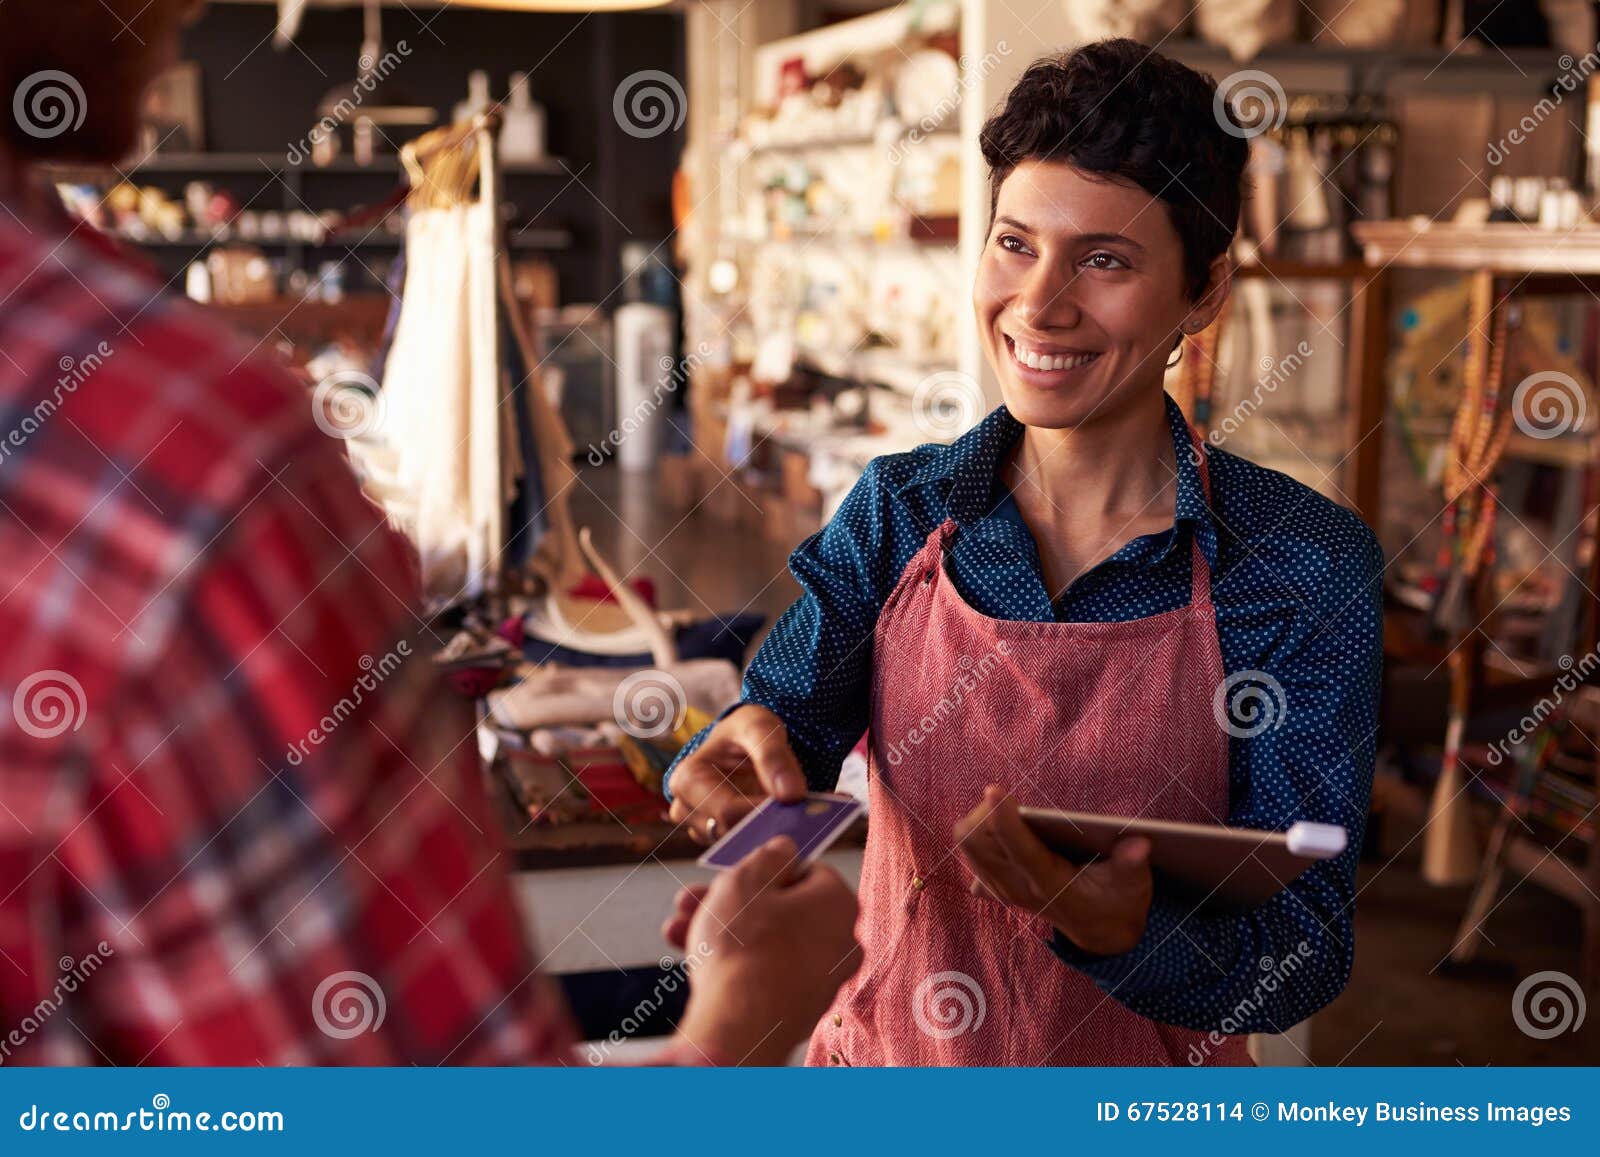 sales assistant with credit card reader on digital tablet